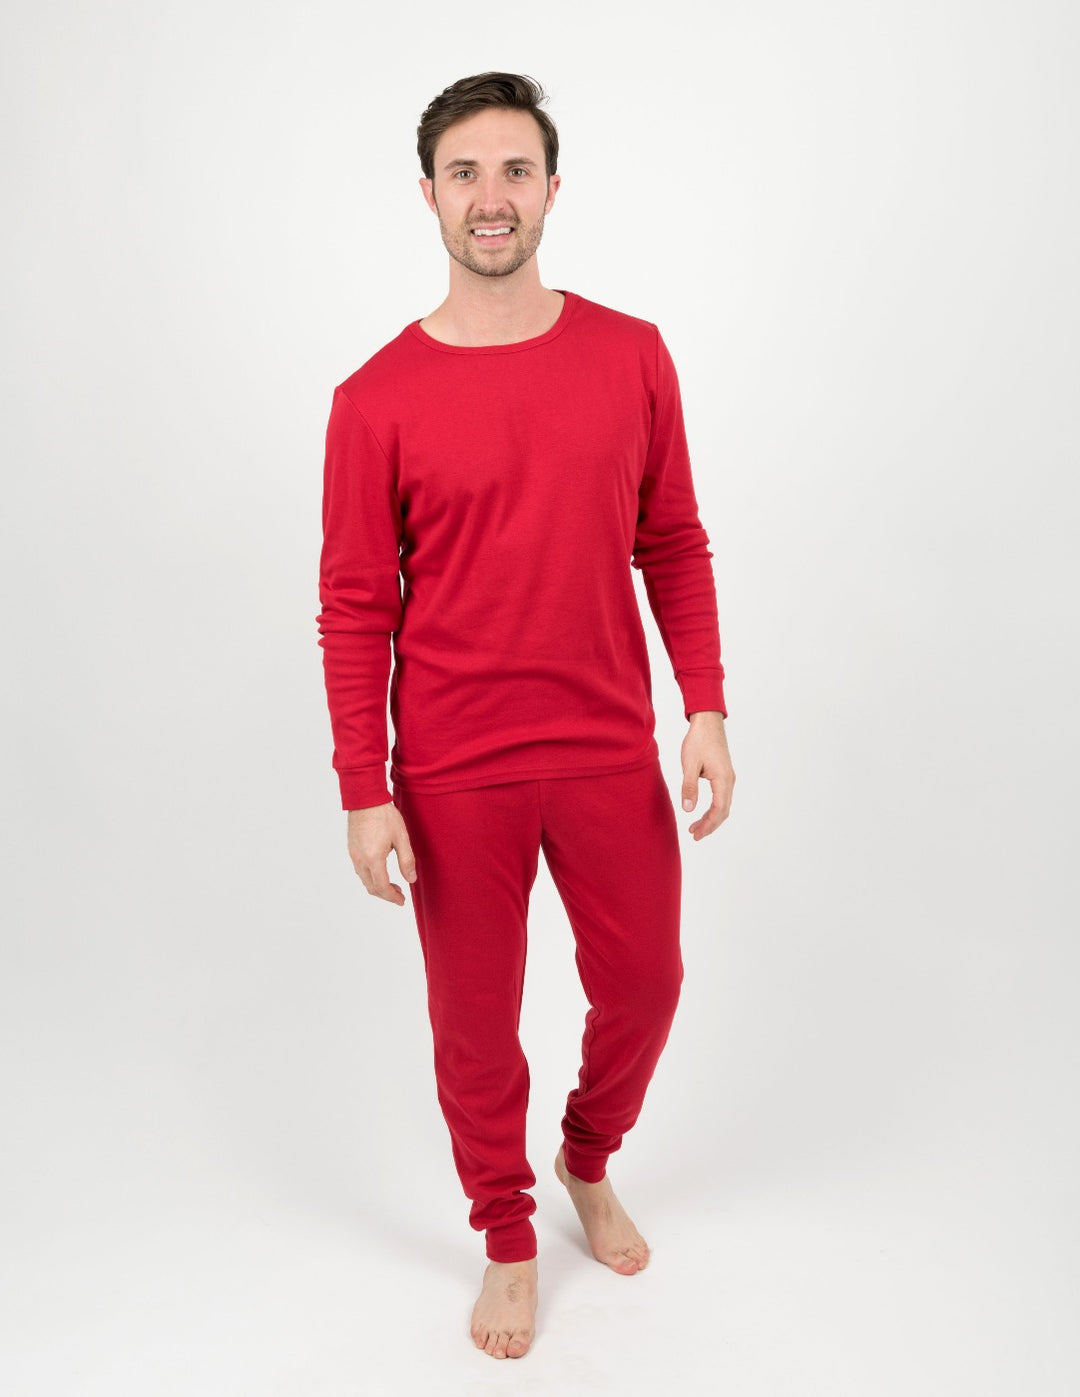 solid color red men's cotton pajama